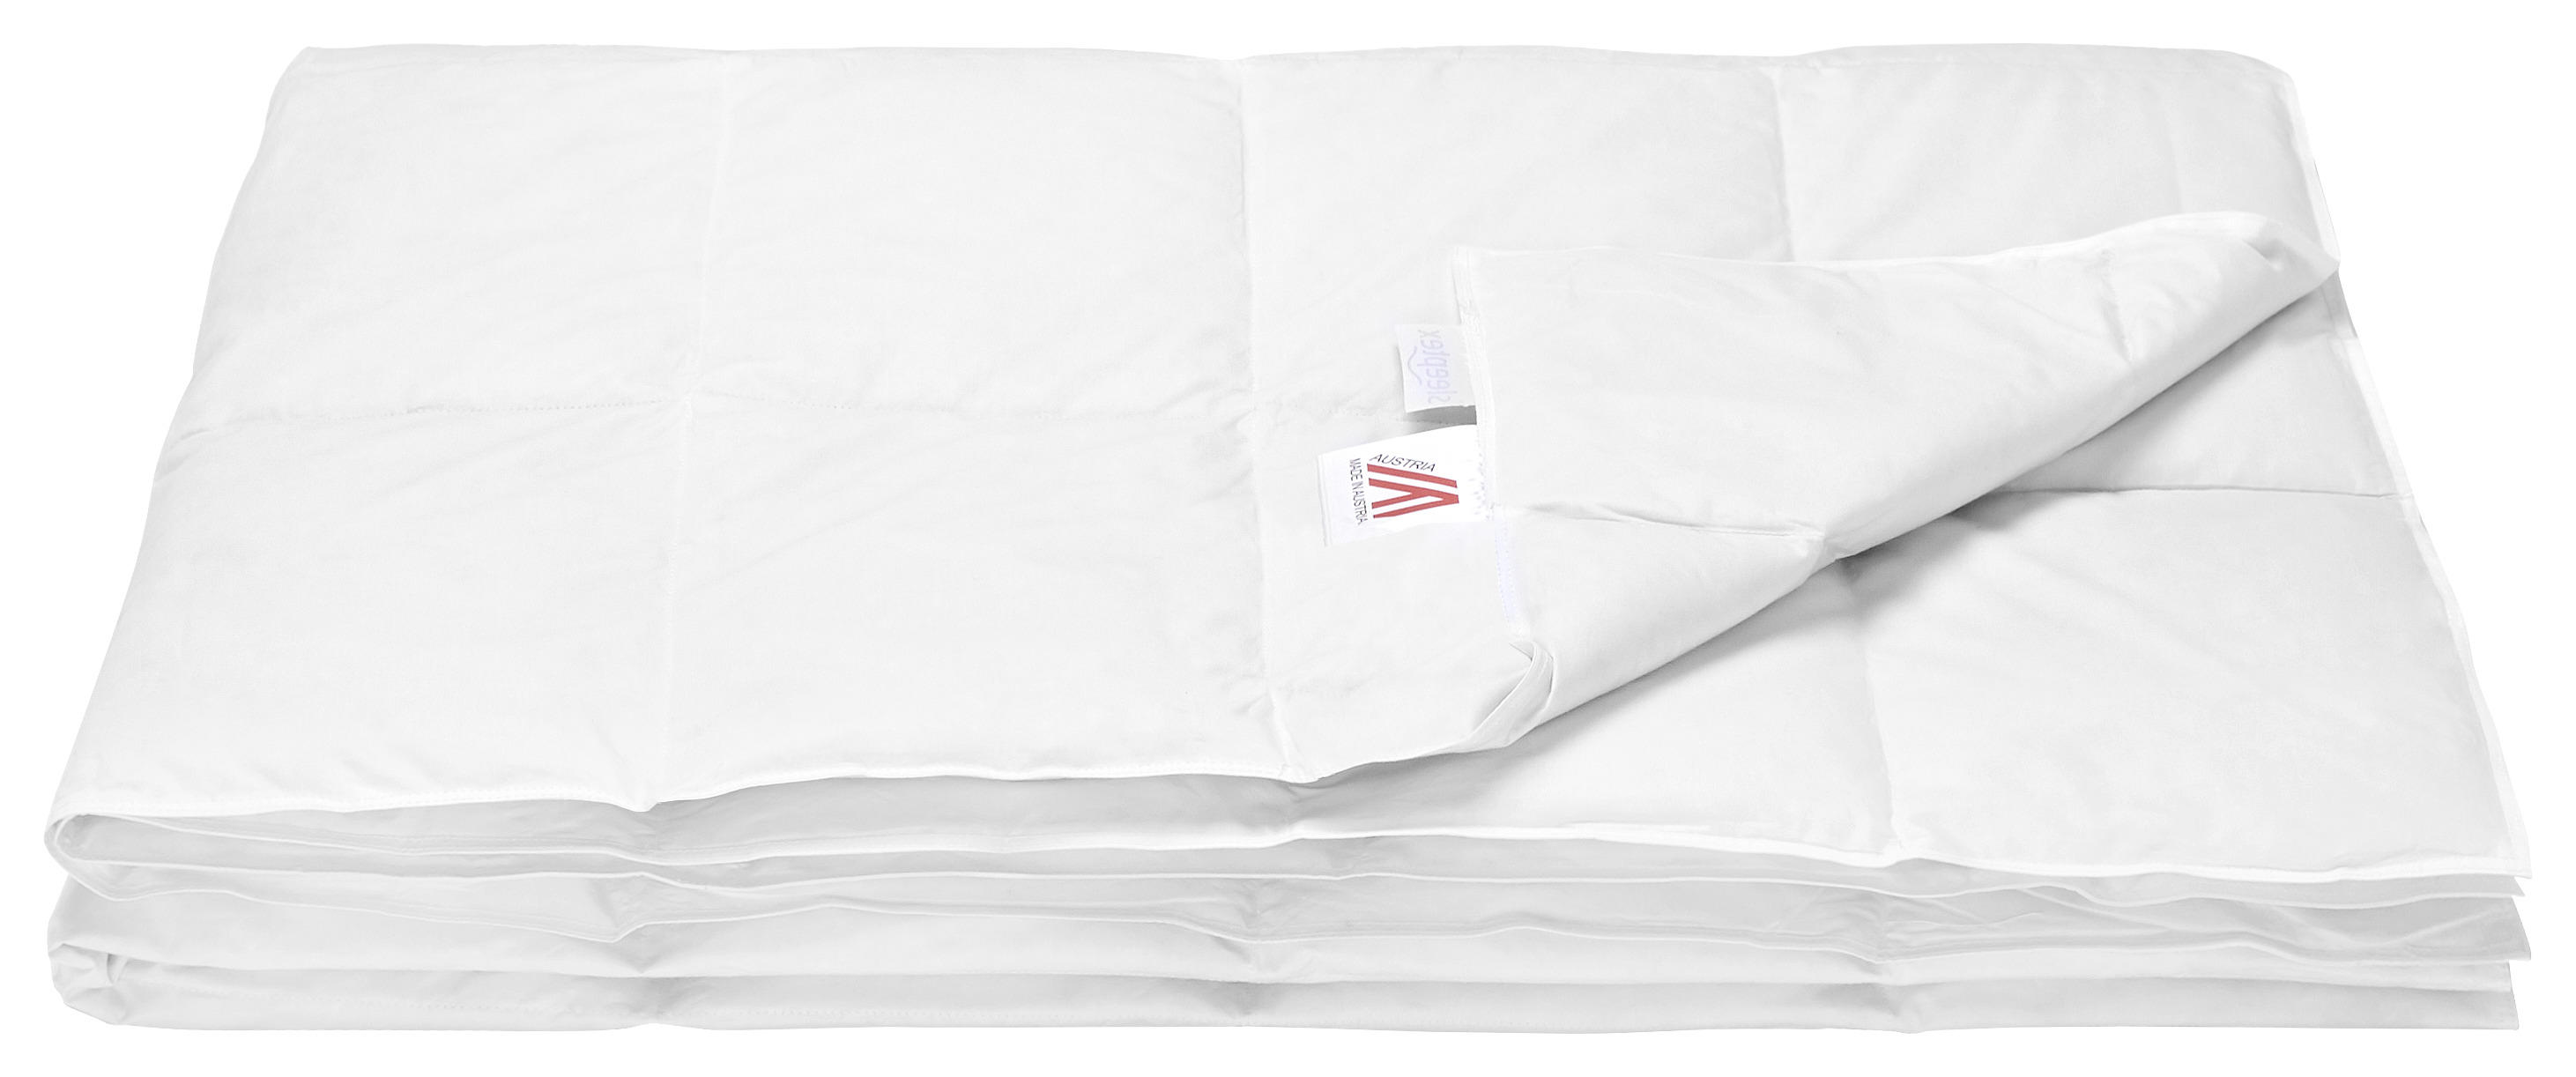 SOMMERDECKE 140/200 cm  - Weiß, Basics, Textil (140/200cm) - Sleeptex